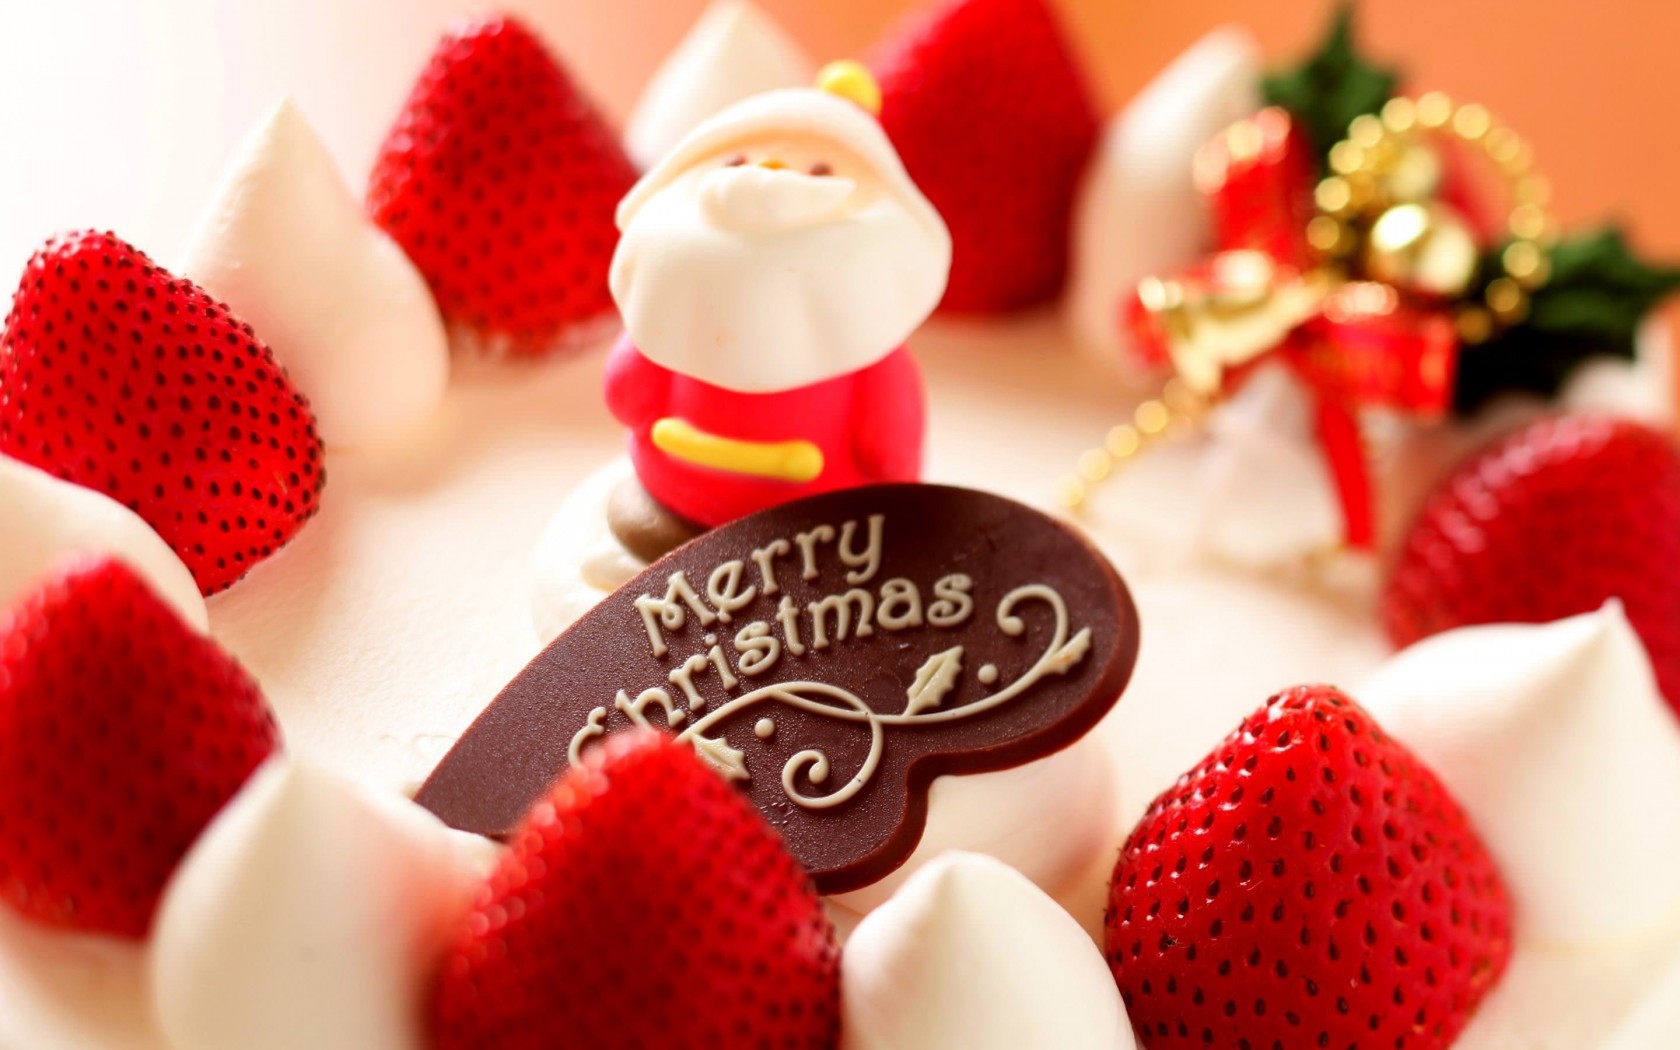 Merry Christmas Strawberry Dessert Wallpaper for Desktop 1680x1050